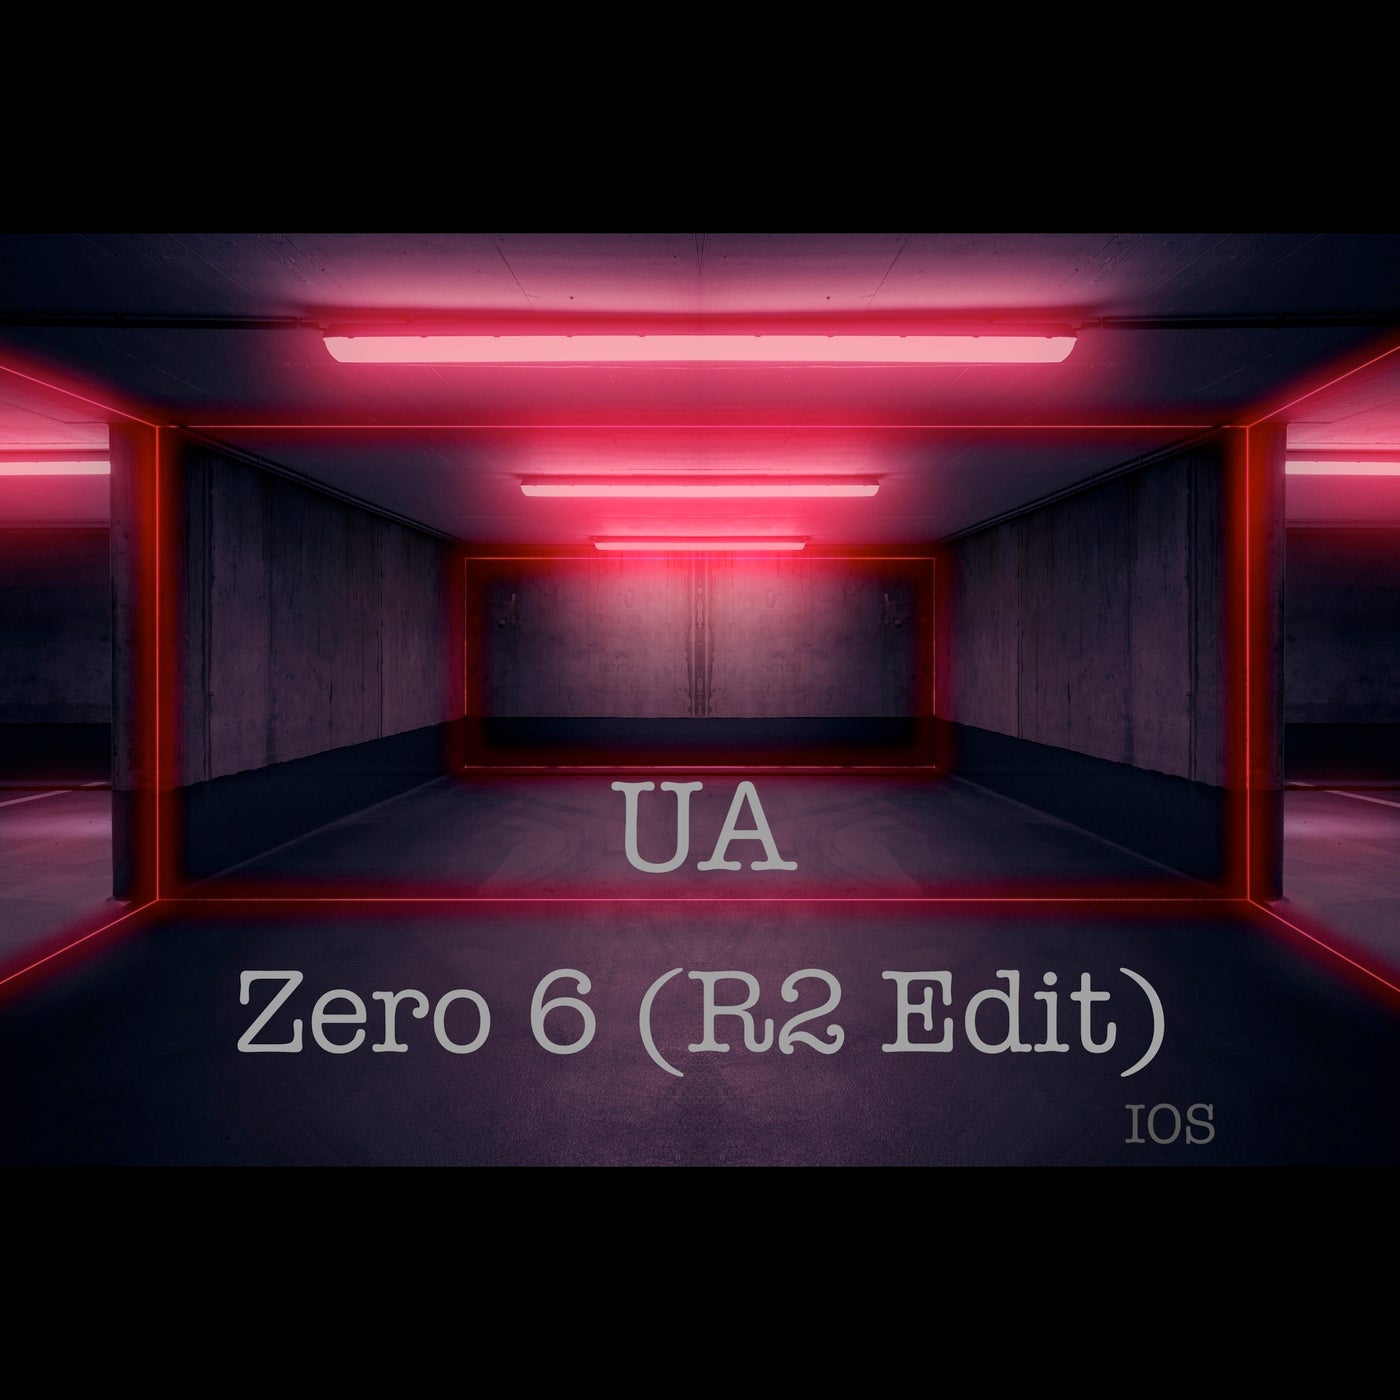 Zero 6 (R2 Edit)